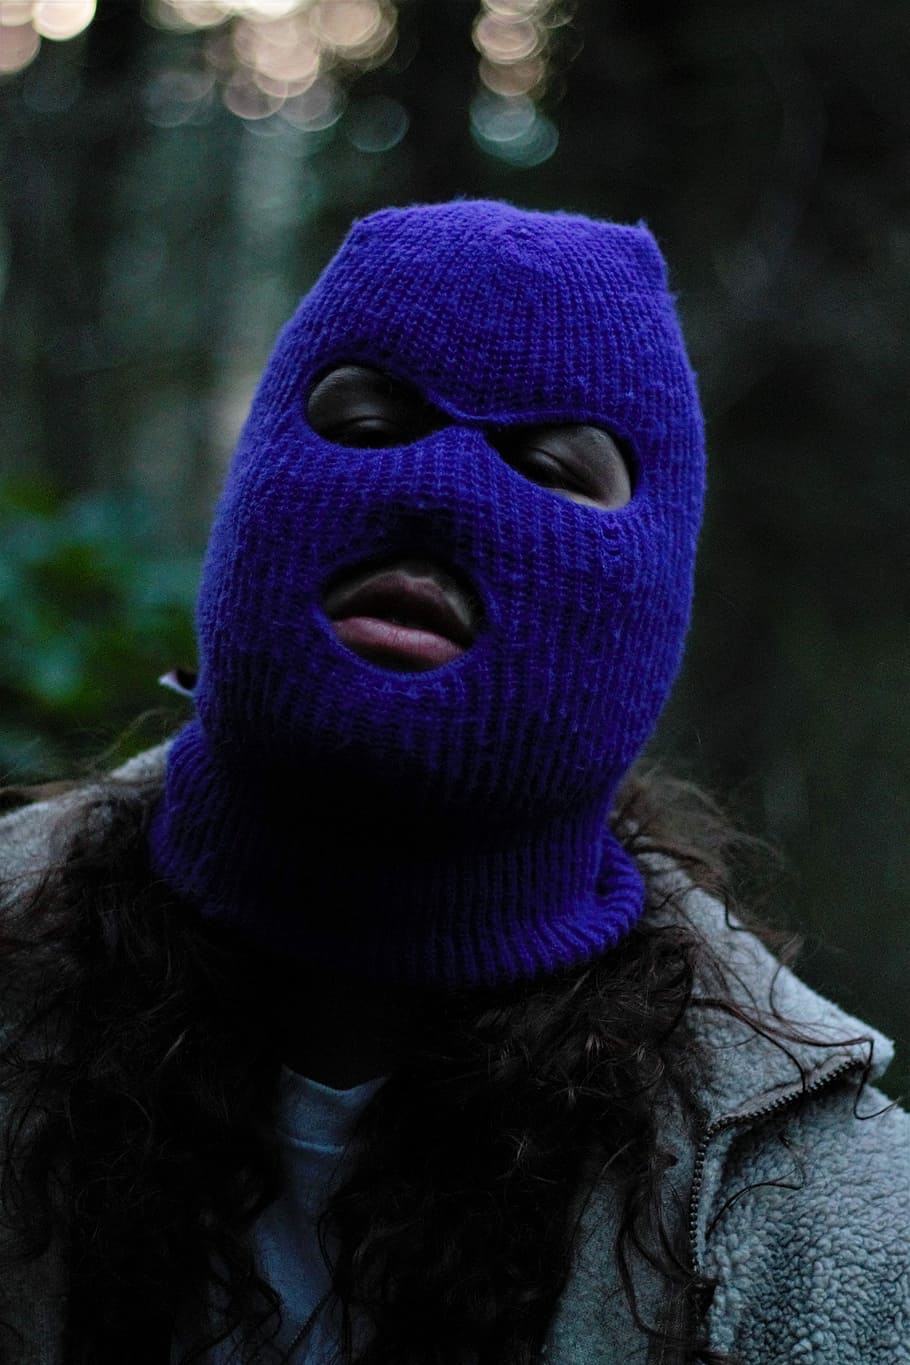 HD wallpaper: person wearing purple balaclava, ski mask, head, focus on foreground